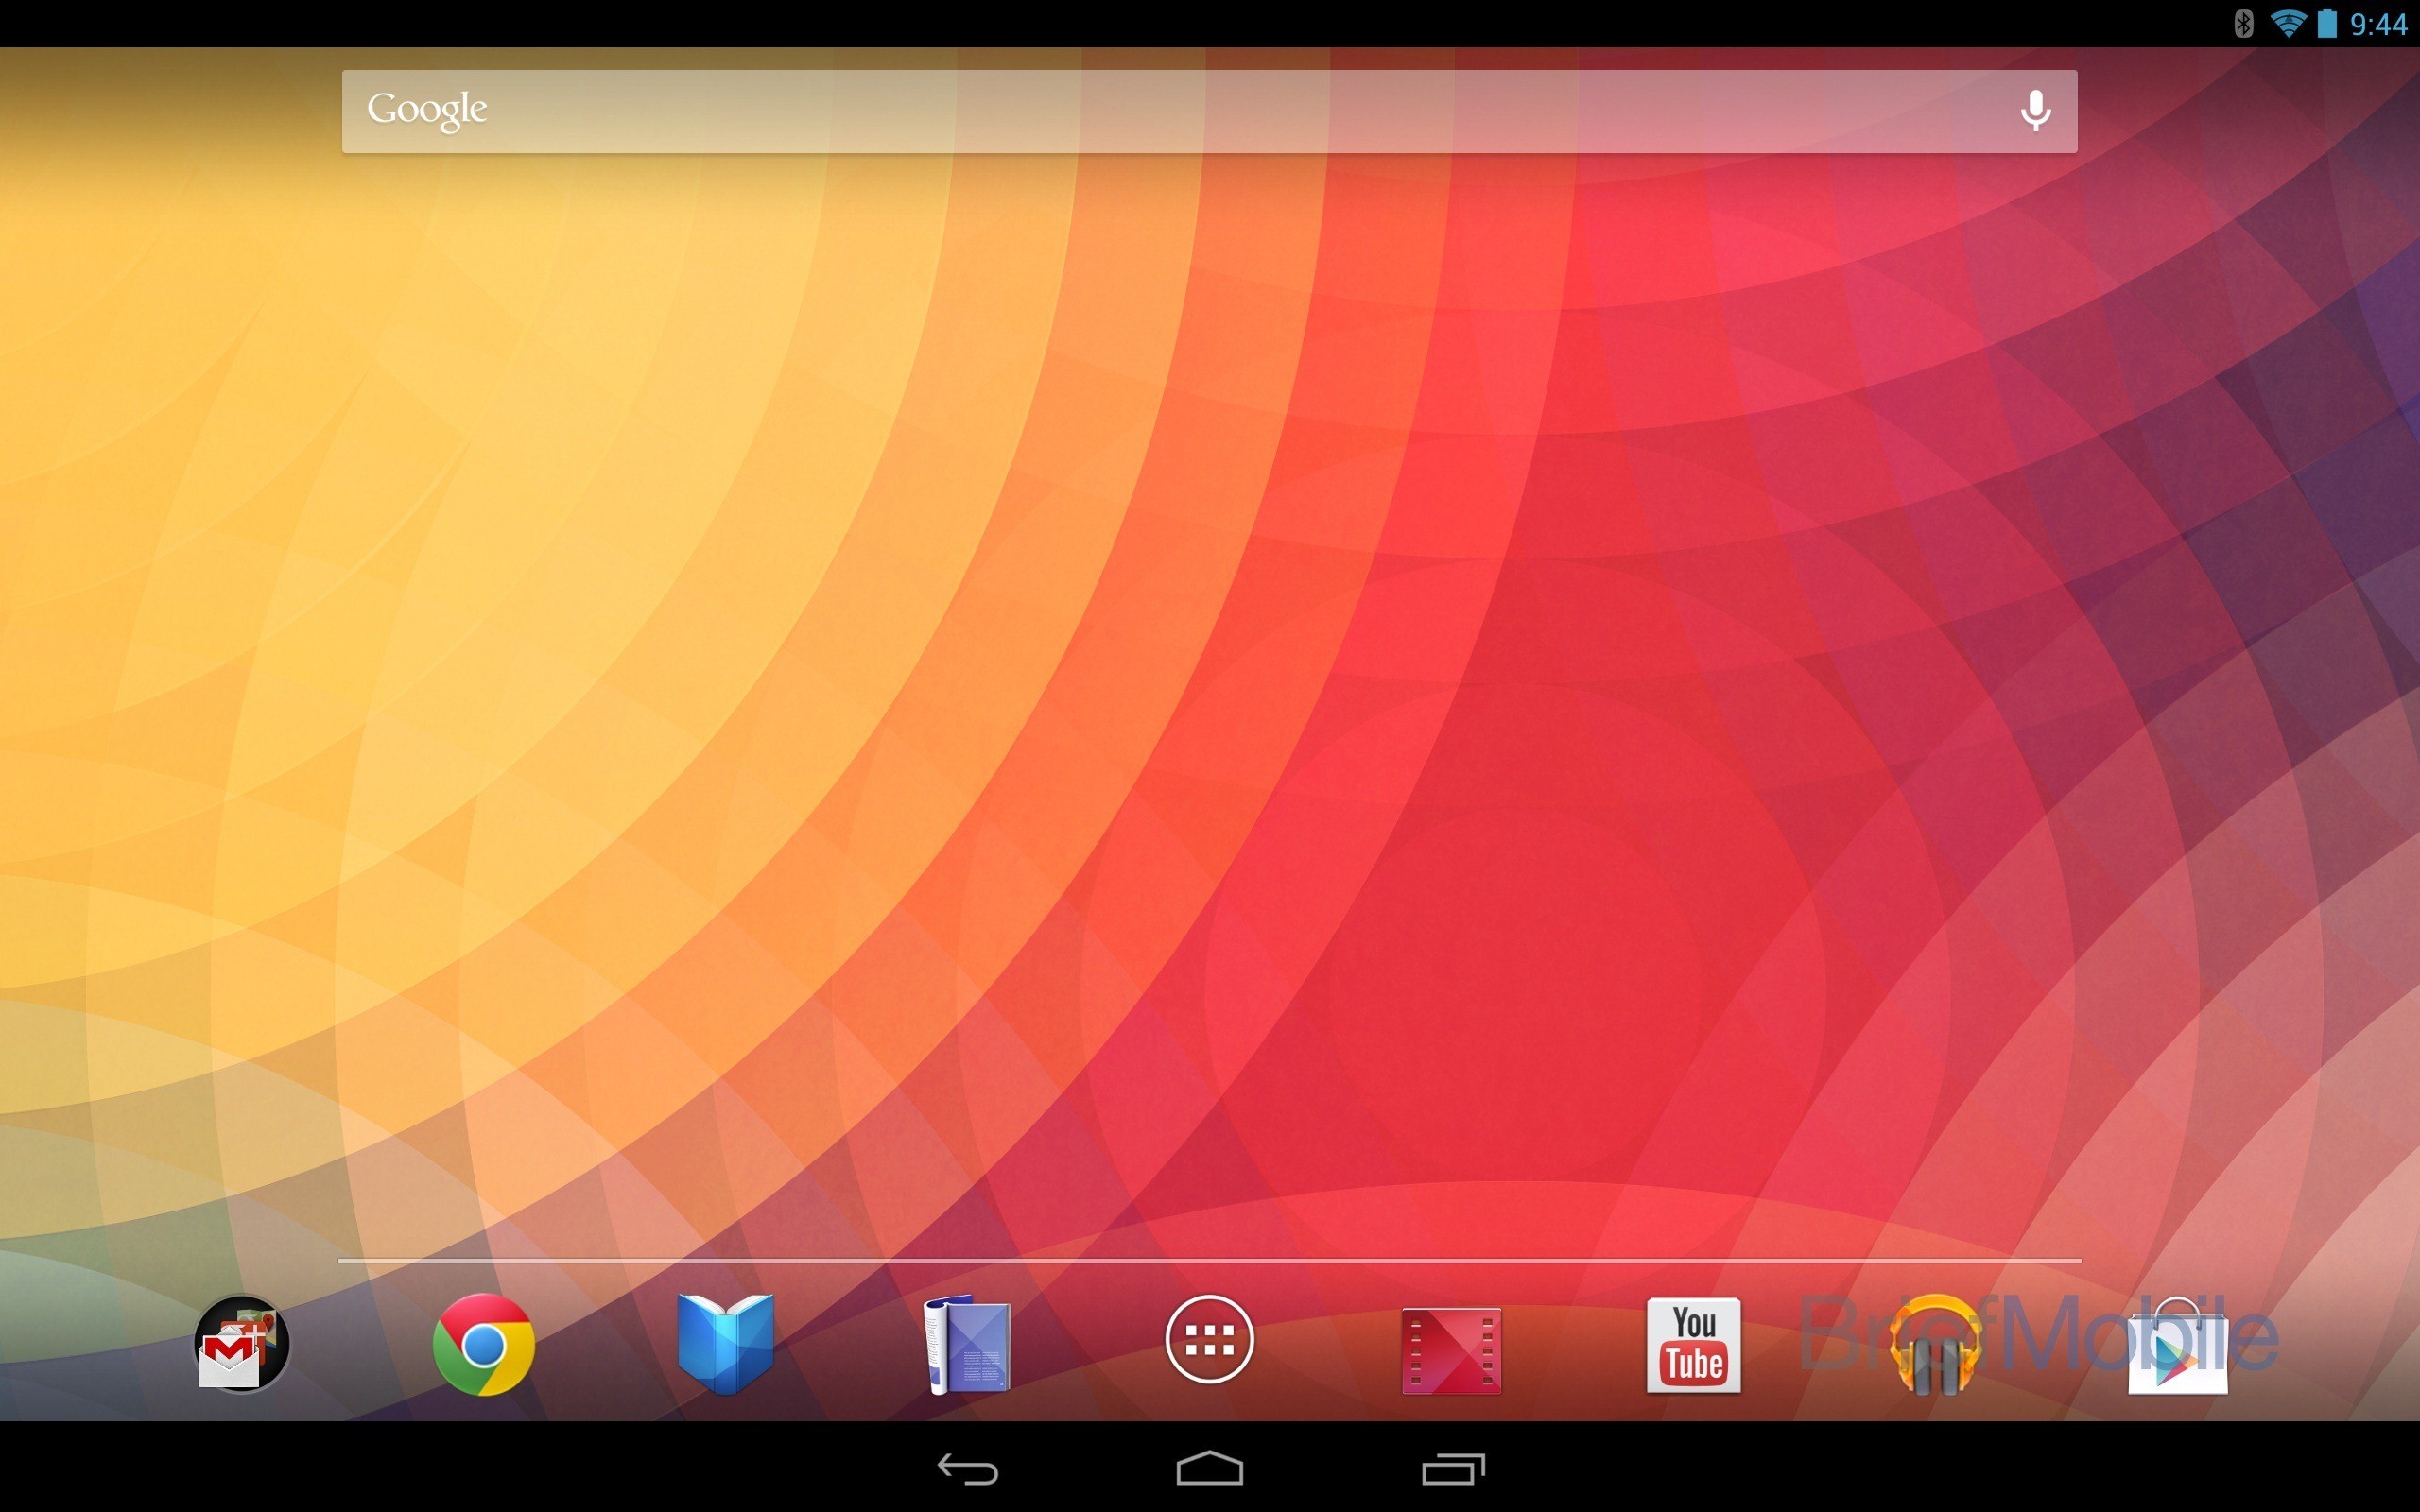 Android Tablet UI: Classica o Ibrida? [SONDAGGIO]